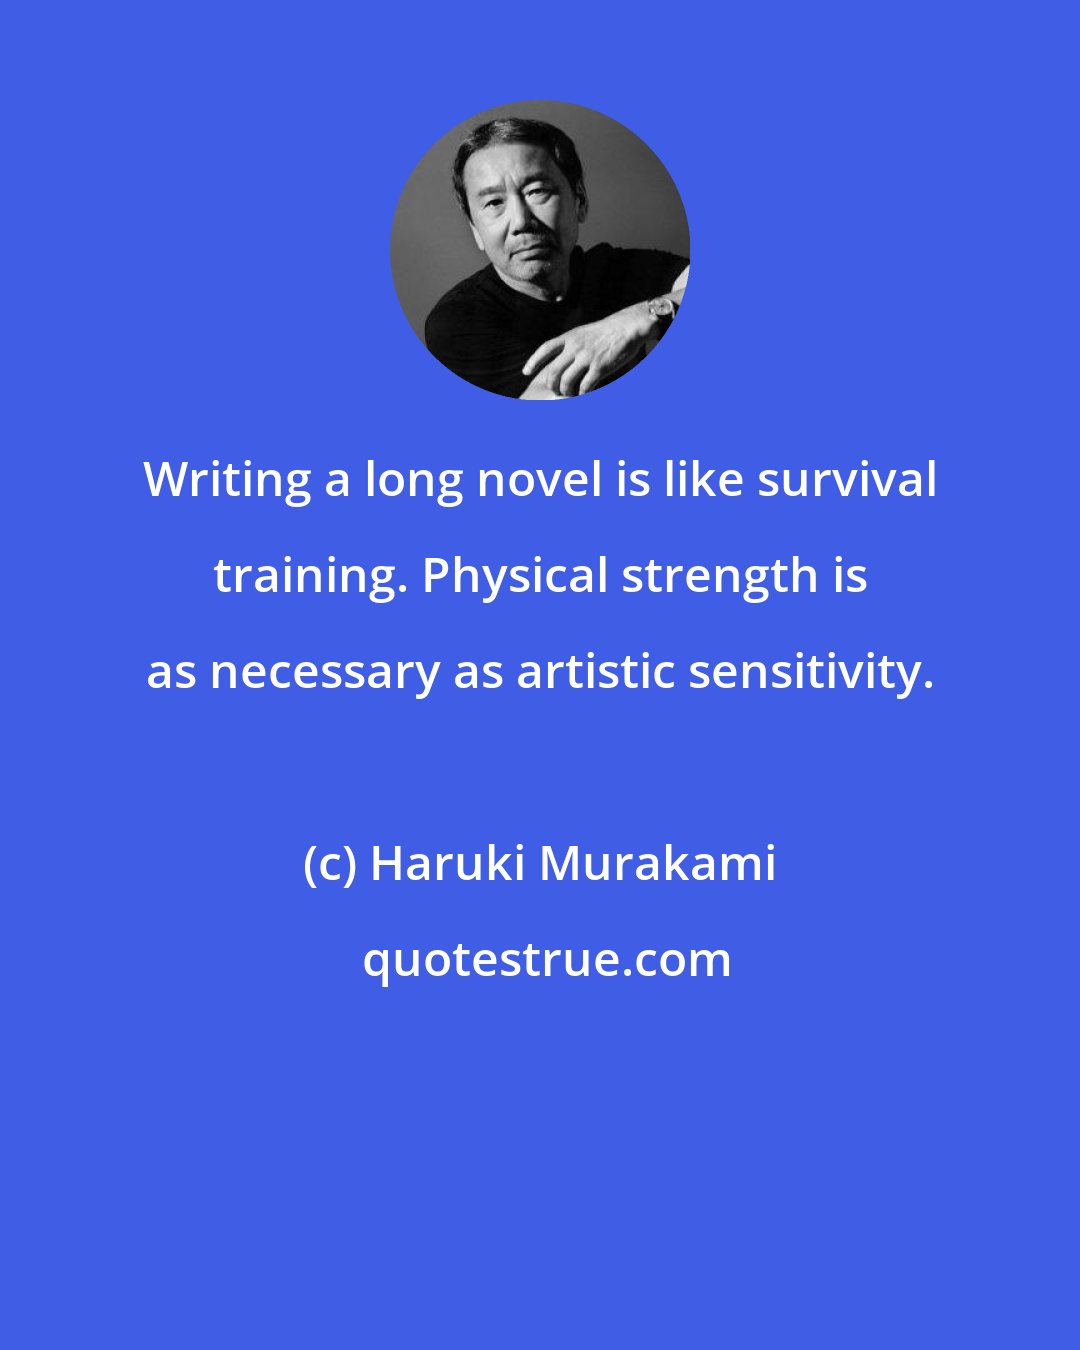 Haruki Murakami: Writing a long novel is like survival training. Physical strength is as necessary as artistic sensitivity.